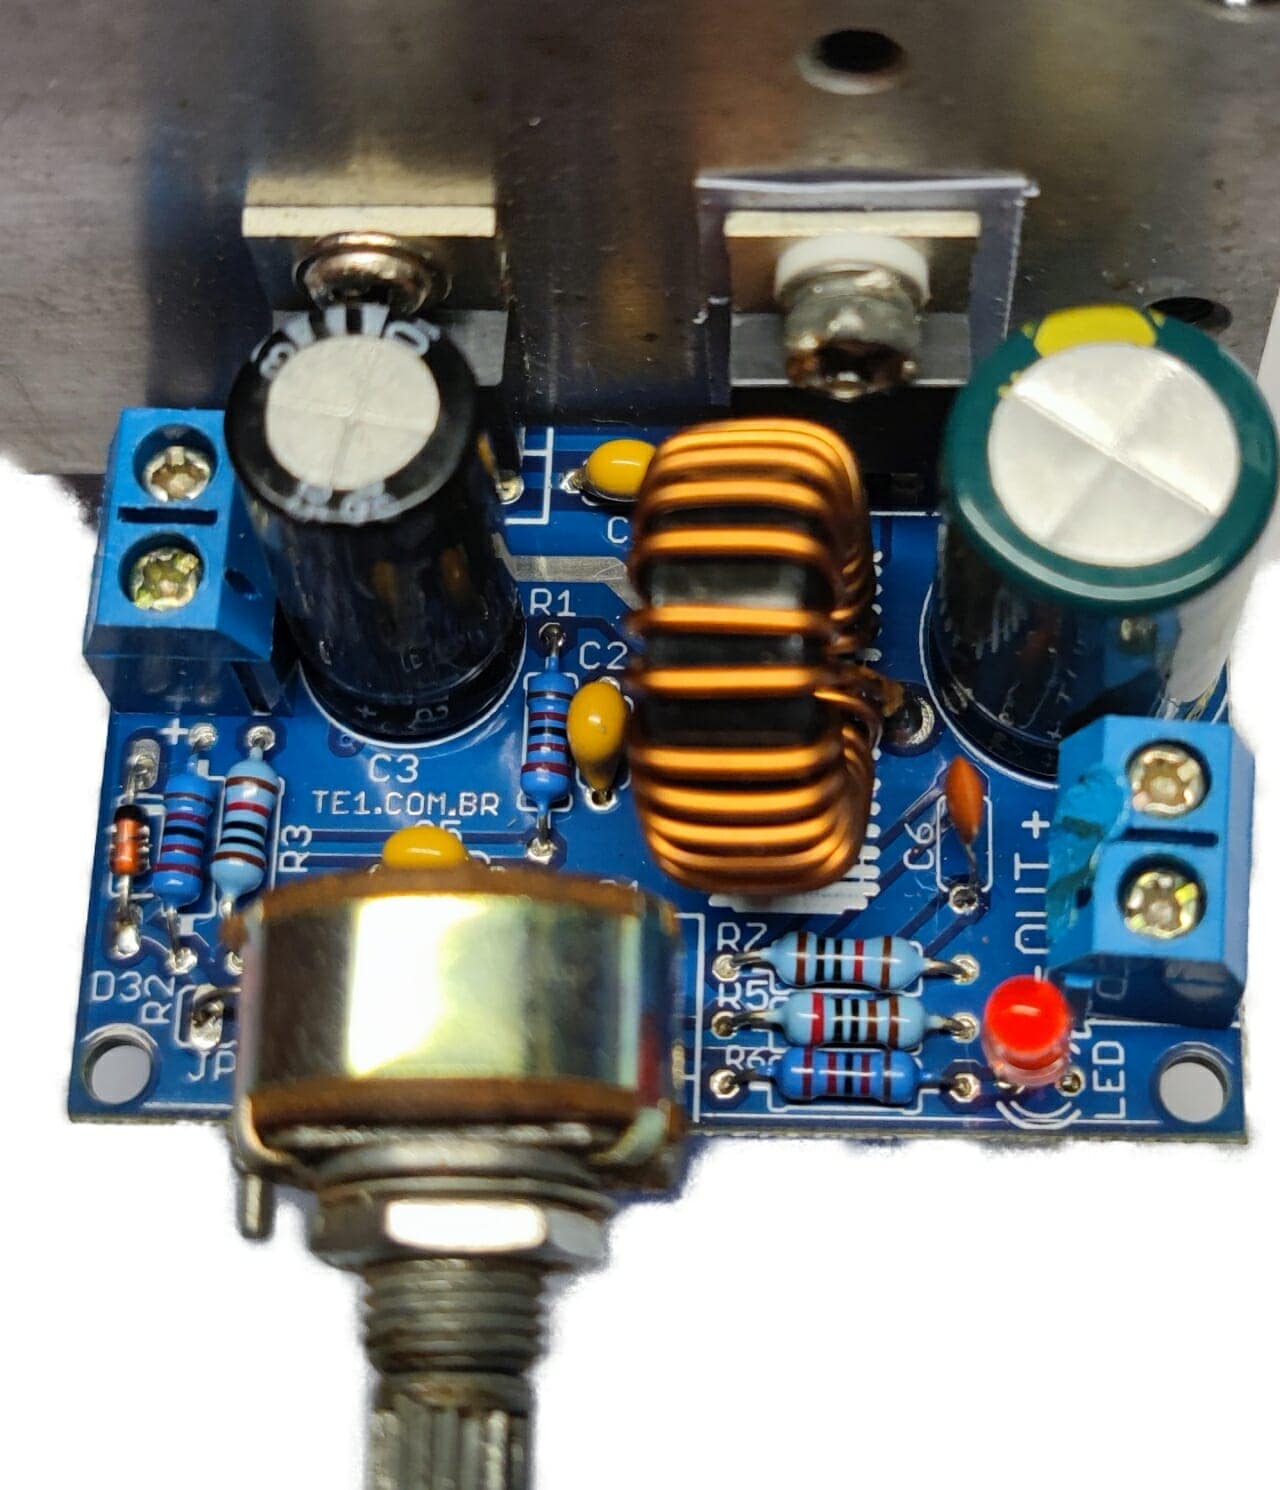 XL4016 DC-DC converter circuit mounted board